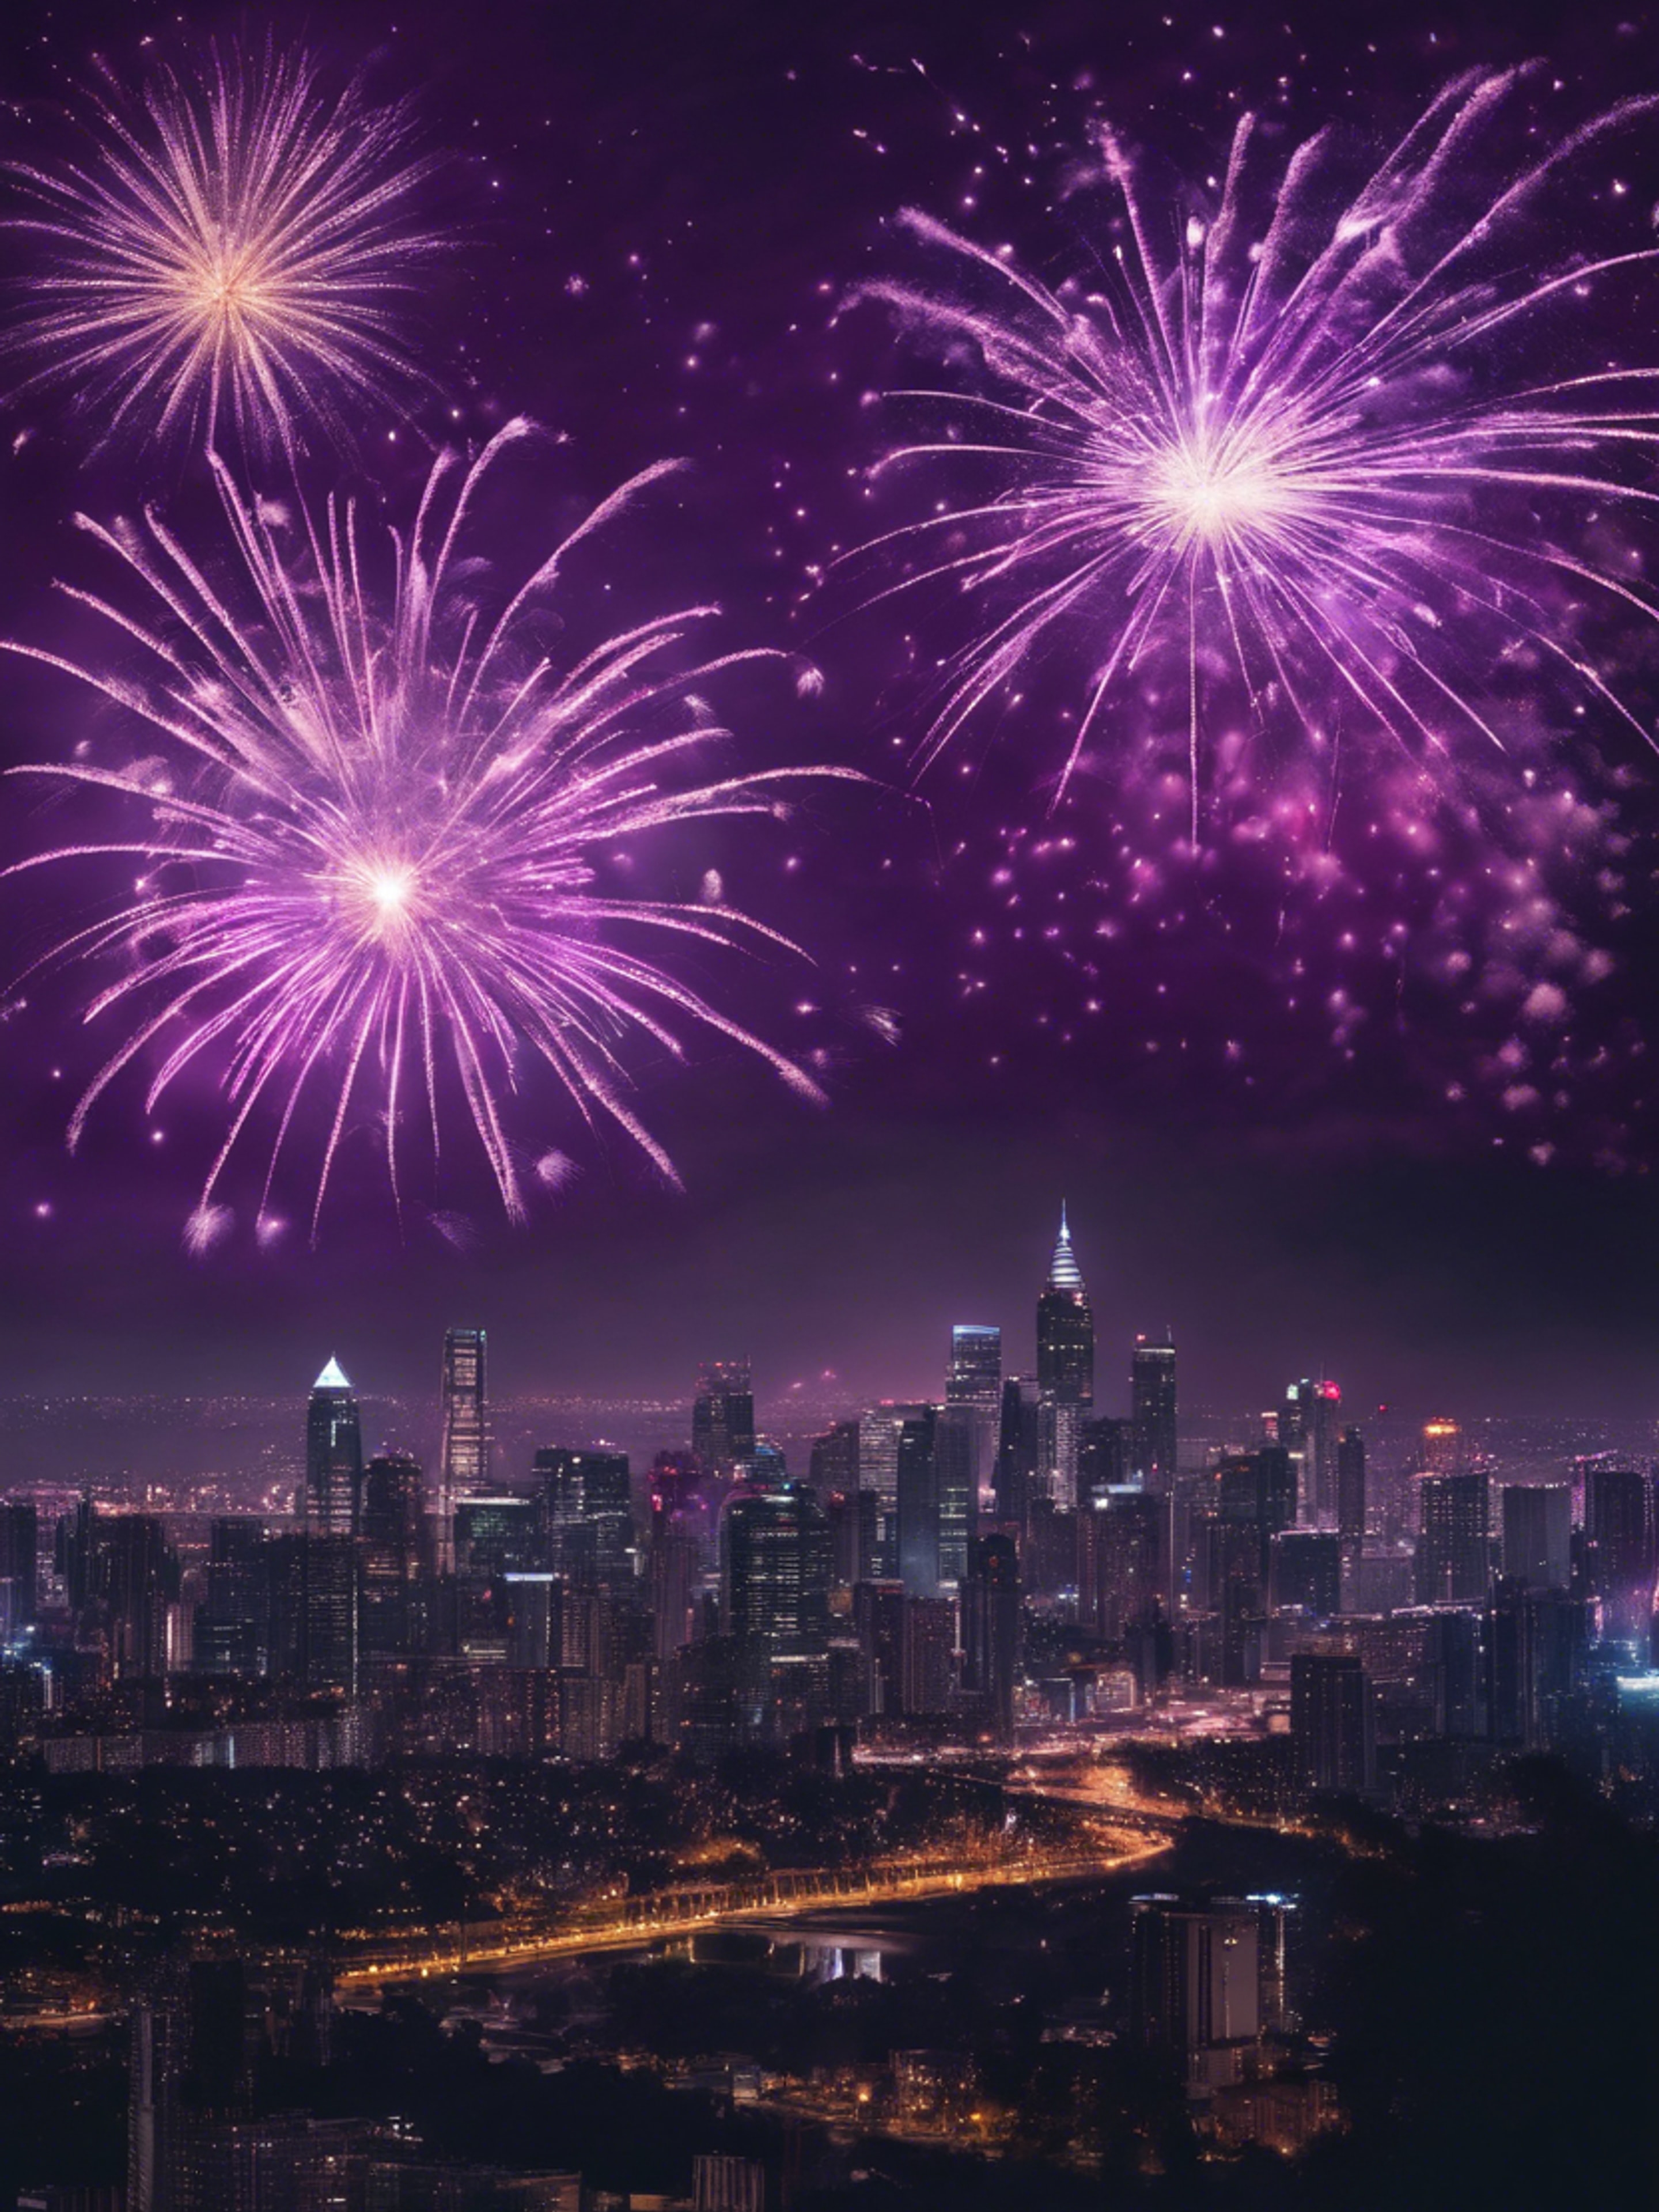 Dark purple fireworks illuminating the night's sky over an illuminated city skyline. Wallpaper[a2398988017f44d3a04c]